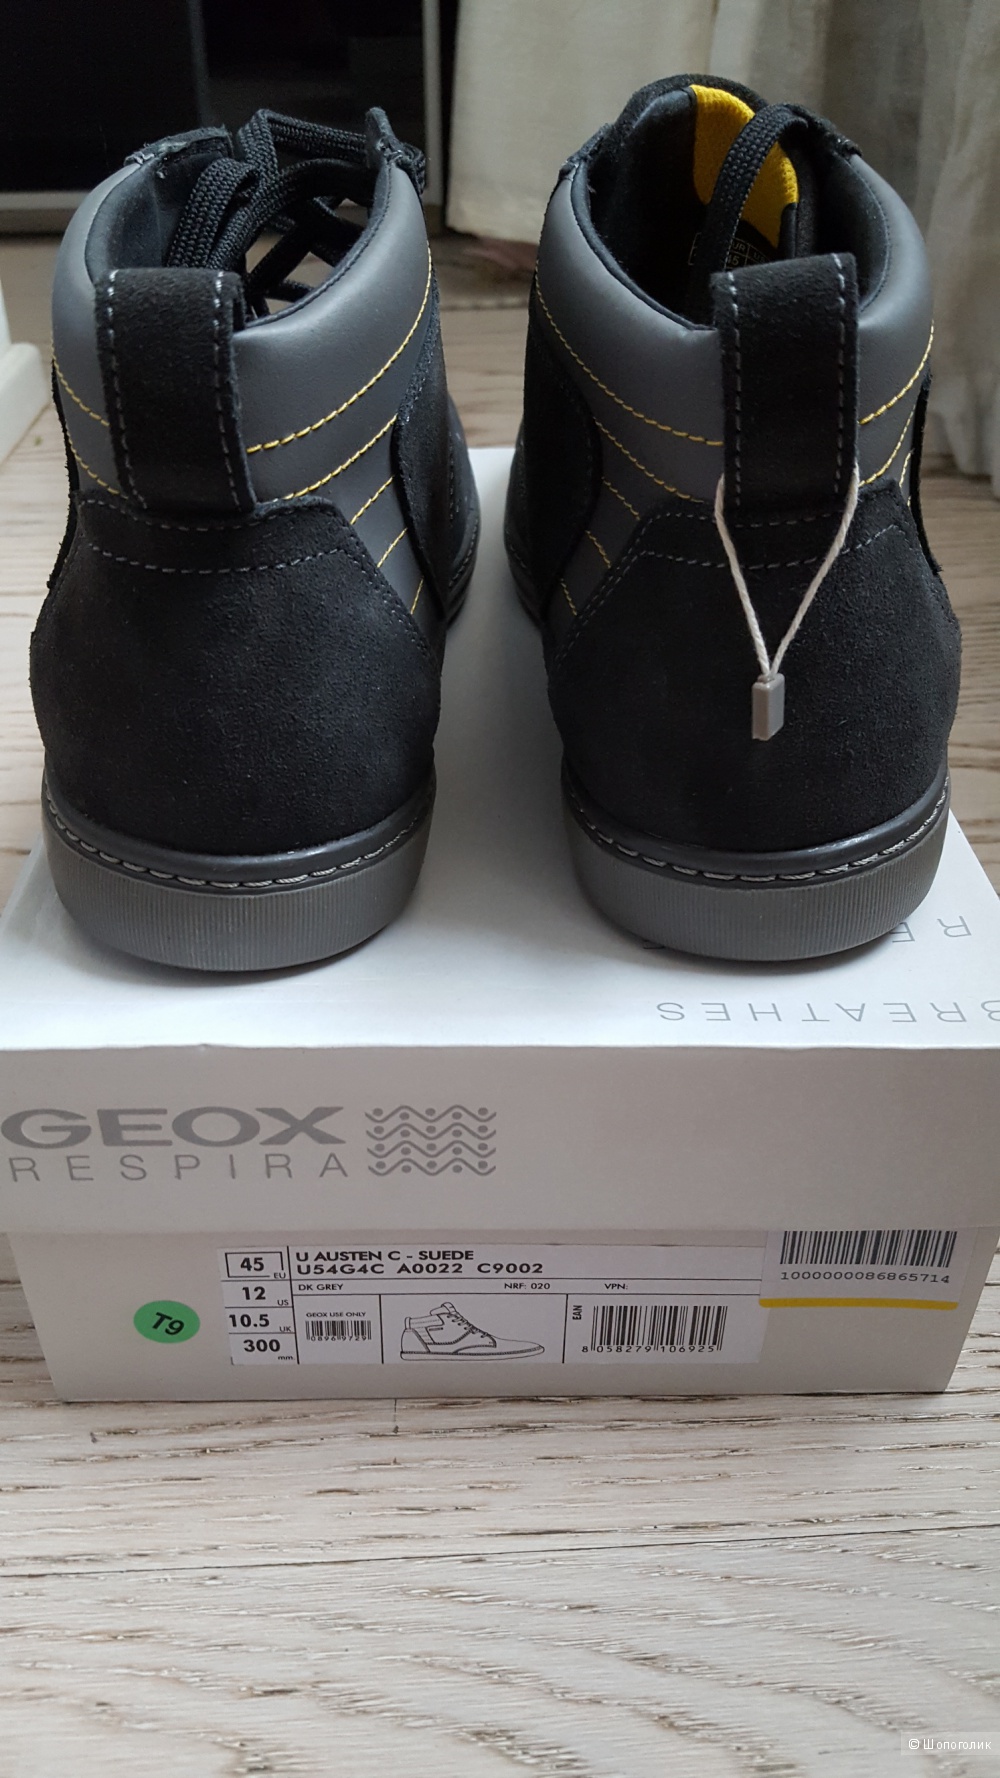 Ботинки GEOX, 45 EU